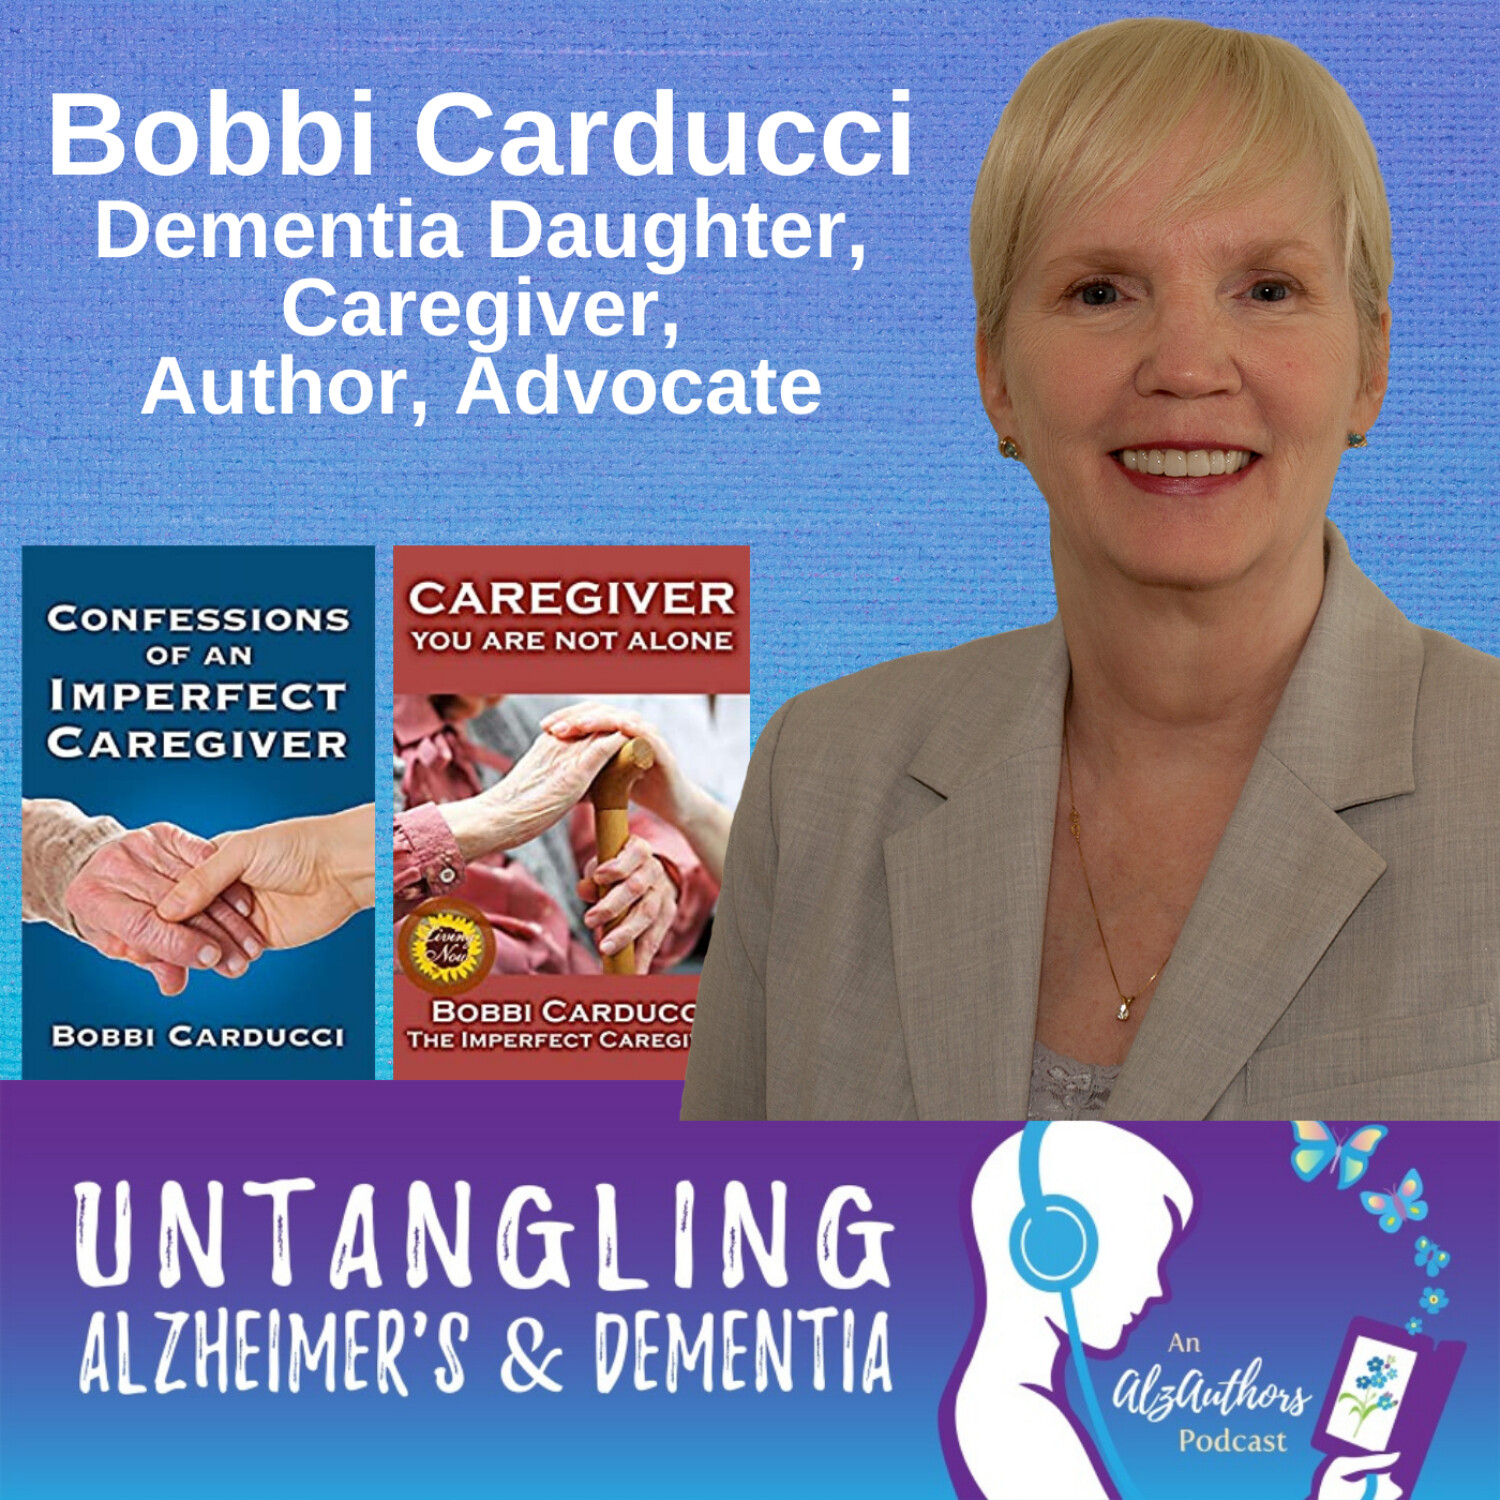 Bobbi Carducci Untangles The Inadequate vs. The Imperfect Caregiver